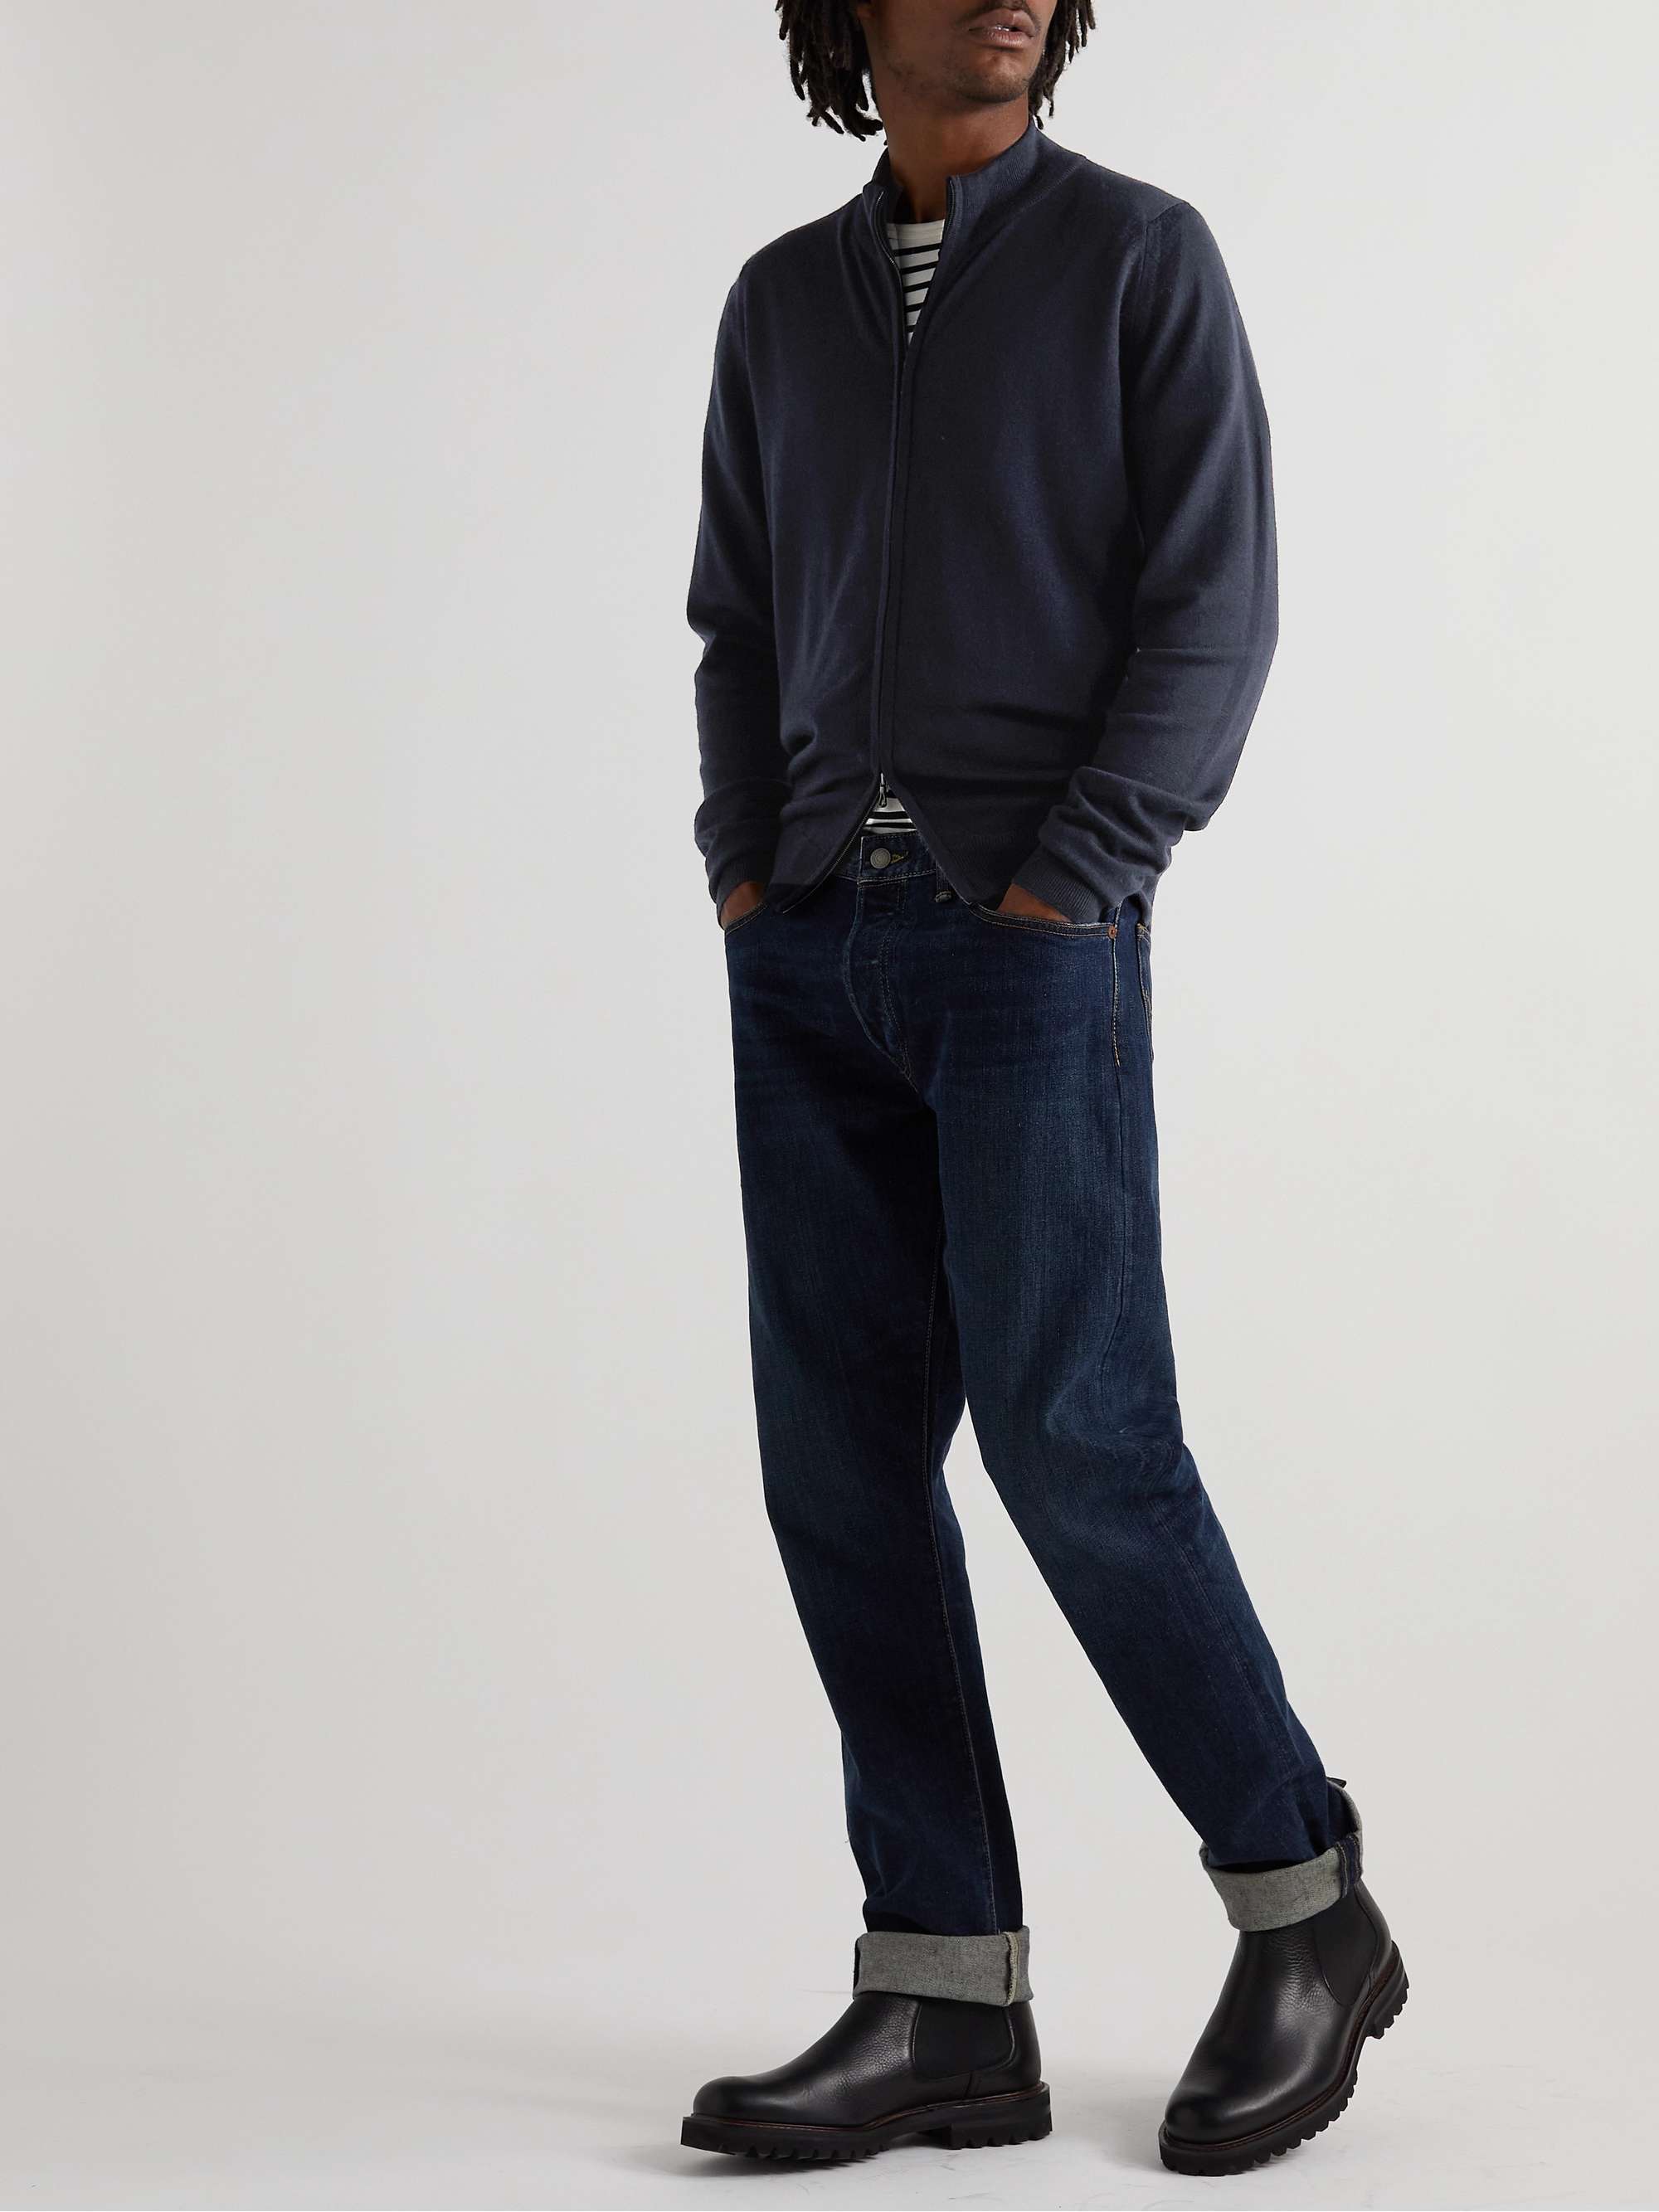 JOHN SMEDLEY Claygate Slim-Fit Merino Wool Zip-Up Cardigan for Men 